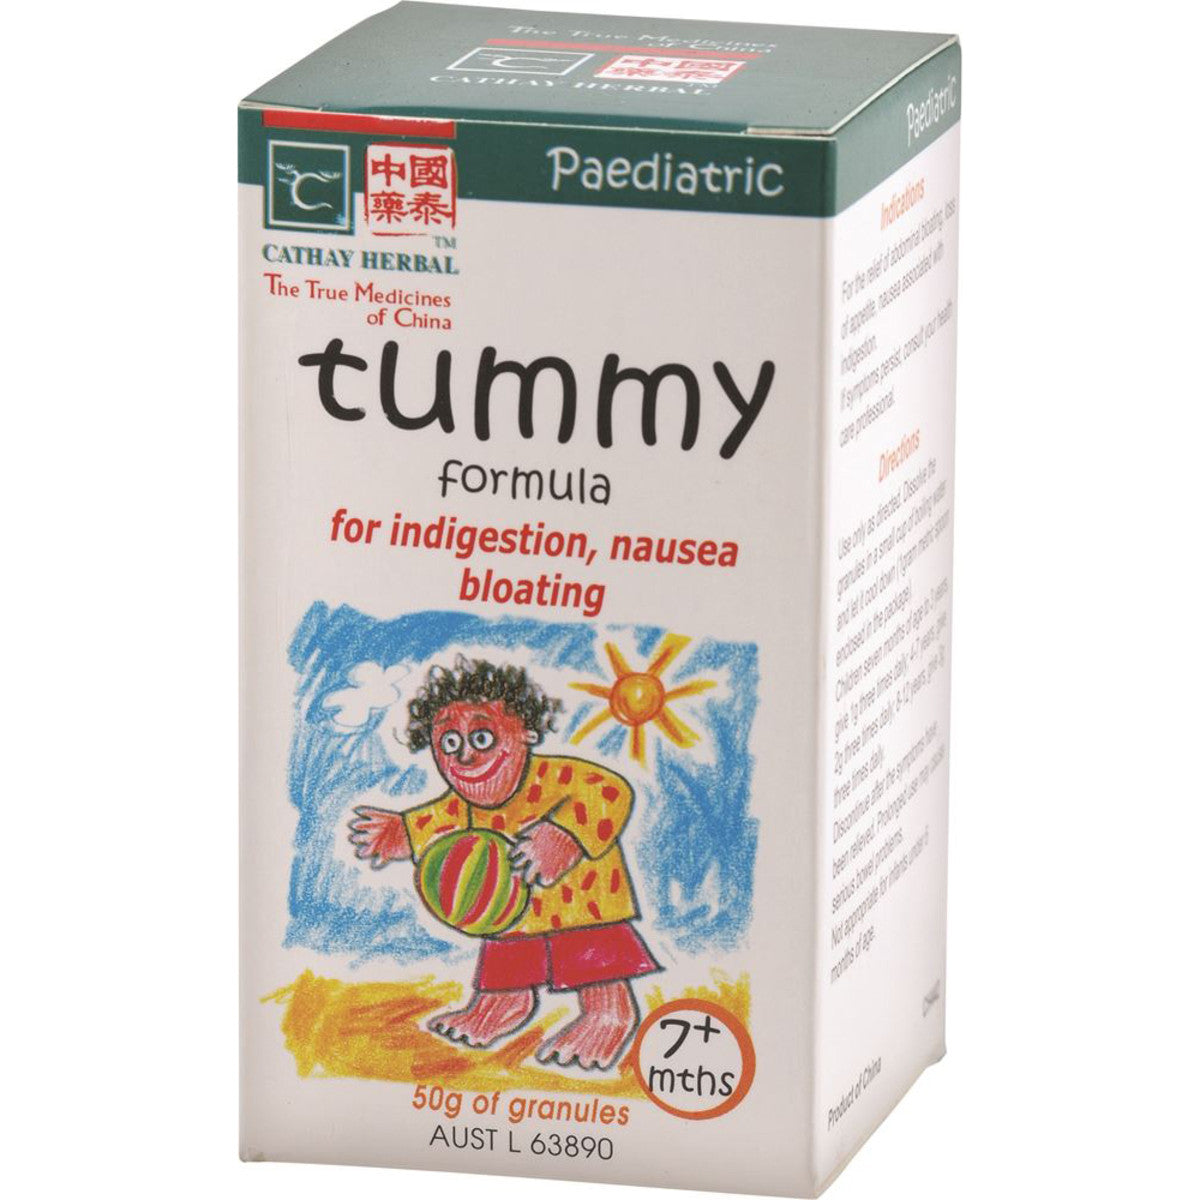 Cathay Herbal - Paediatric Tummy Formula